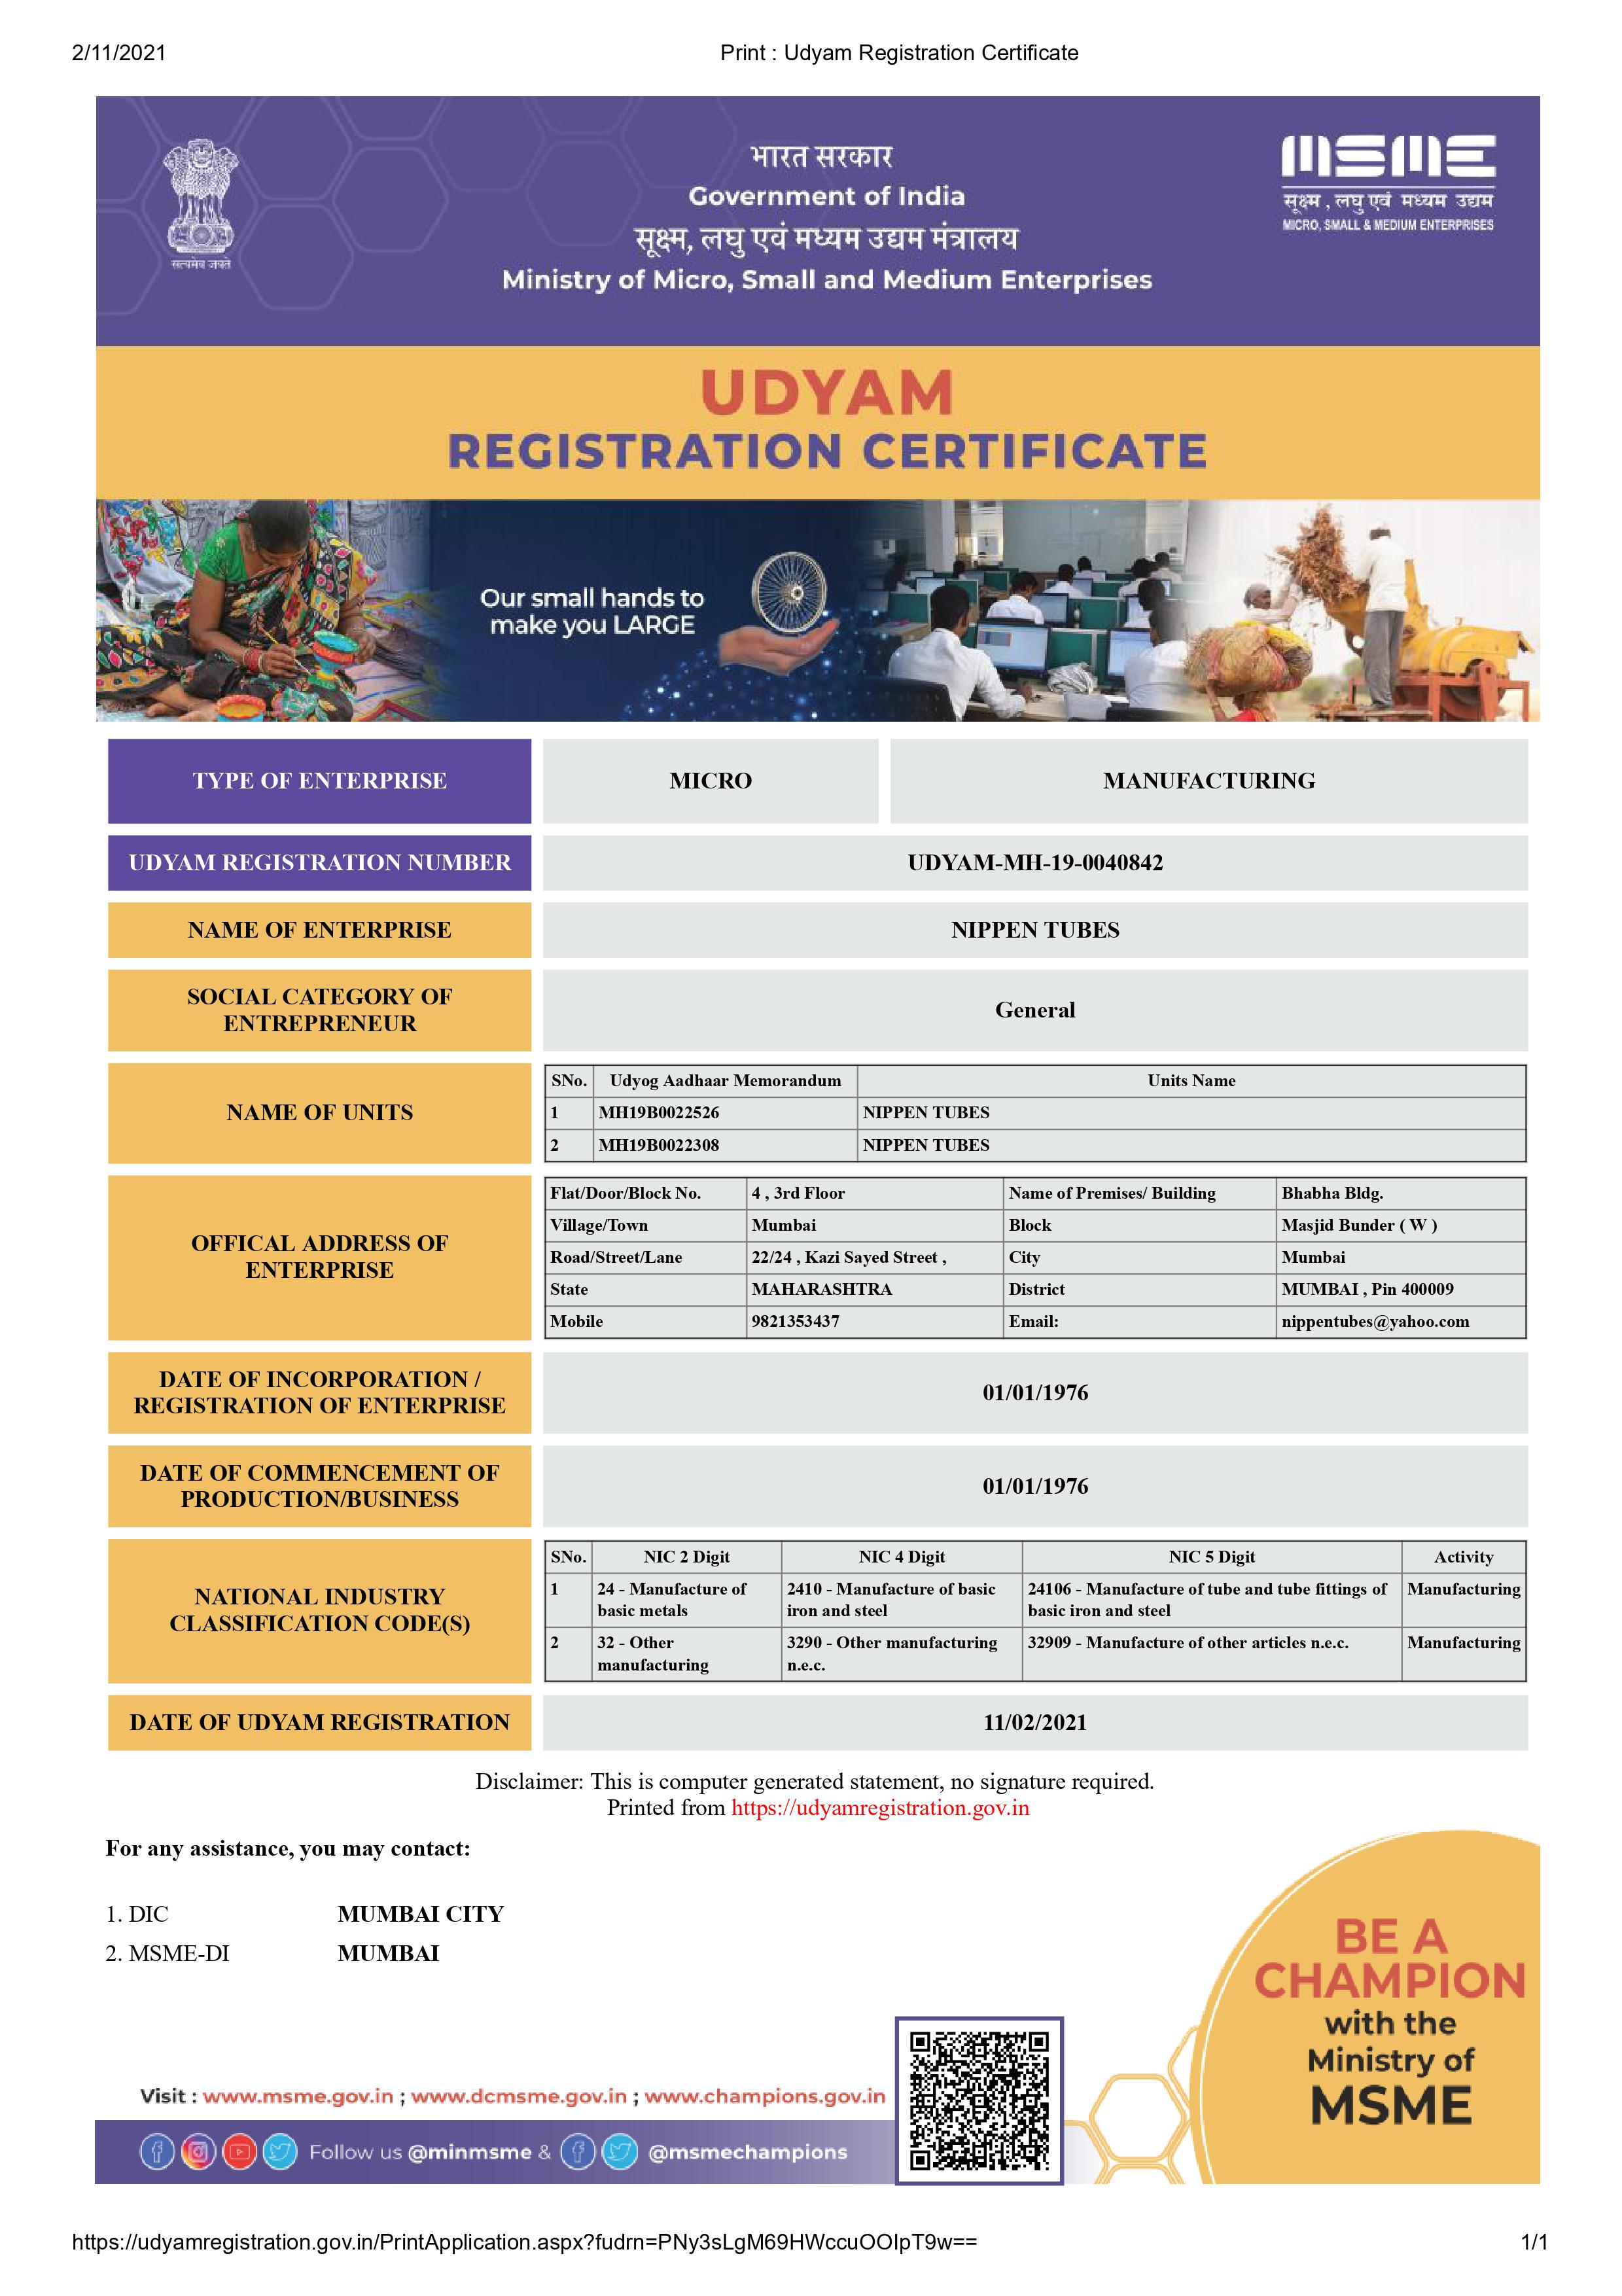 Udyam Registration Certificate - Nippen Tubes